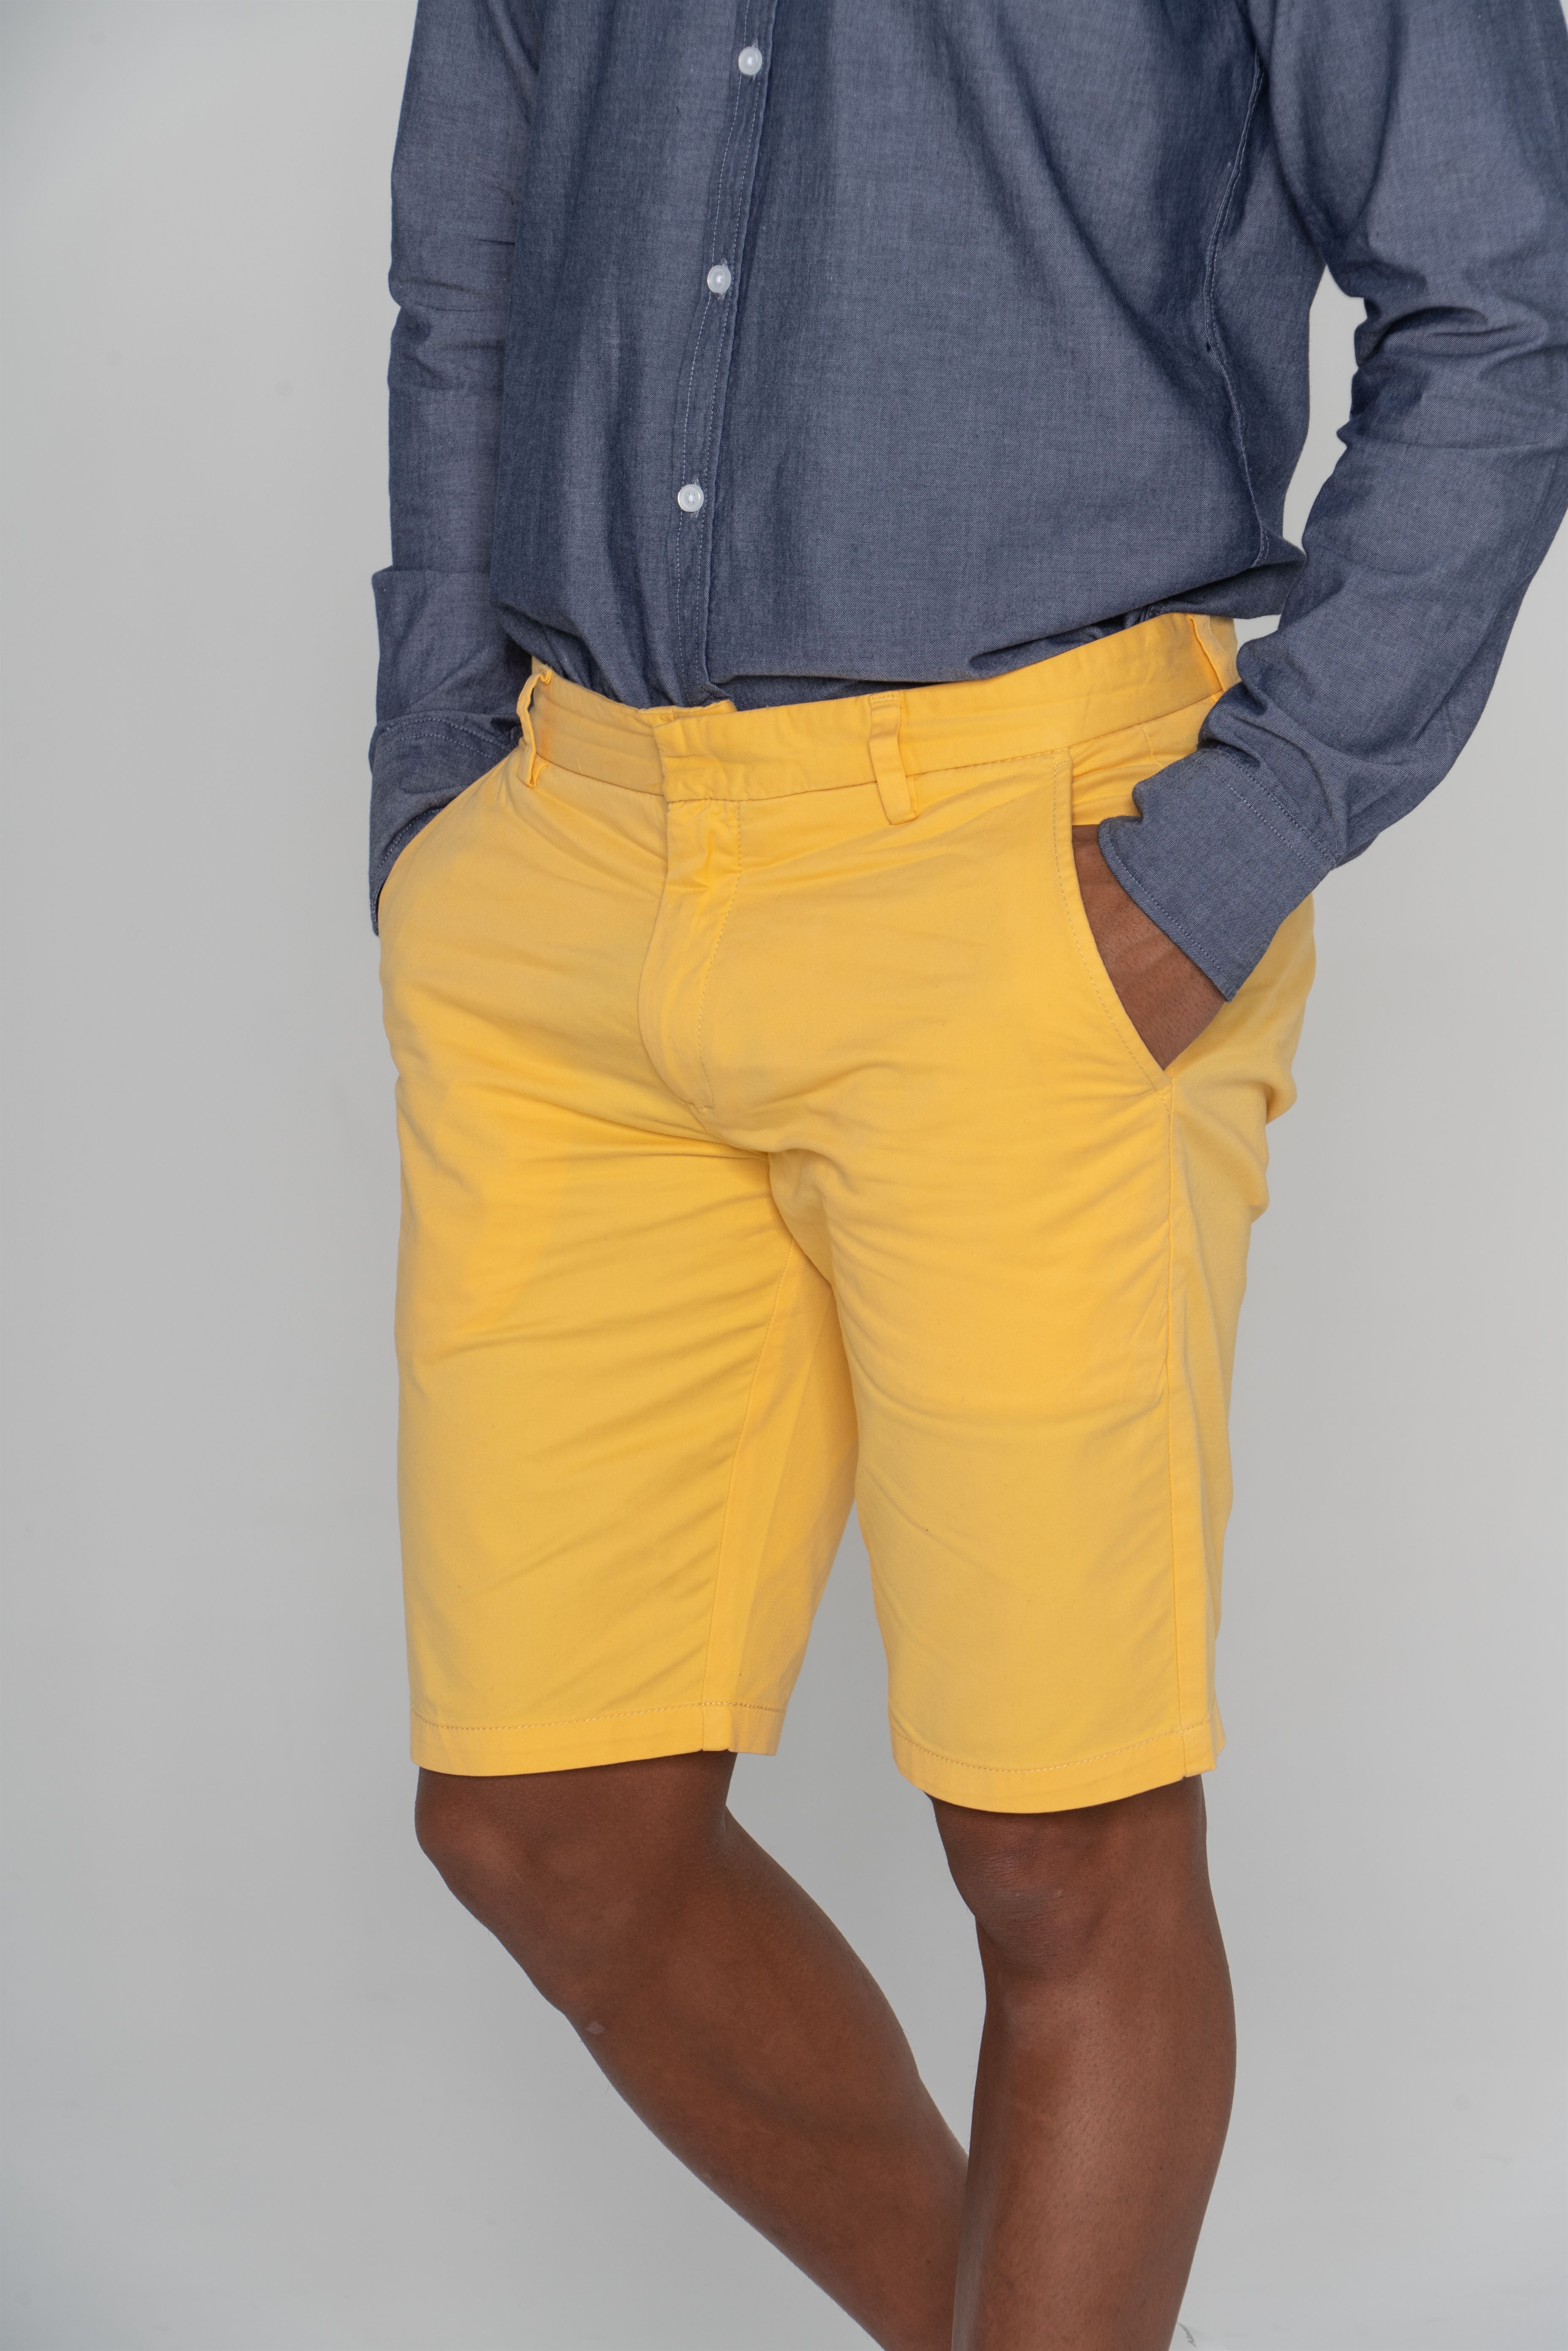 Bermuda Yellow Casual Man